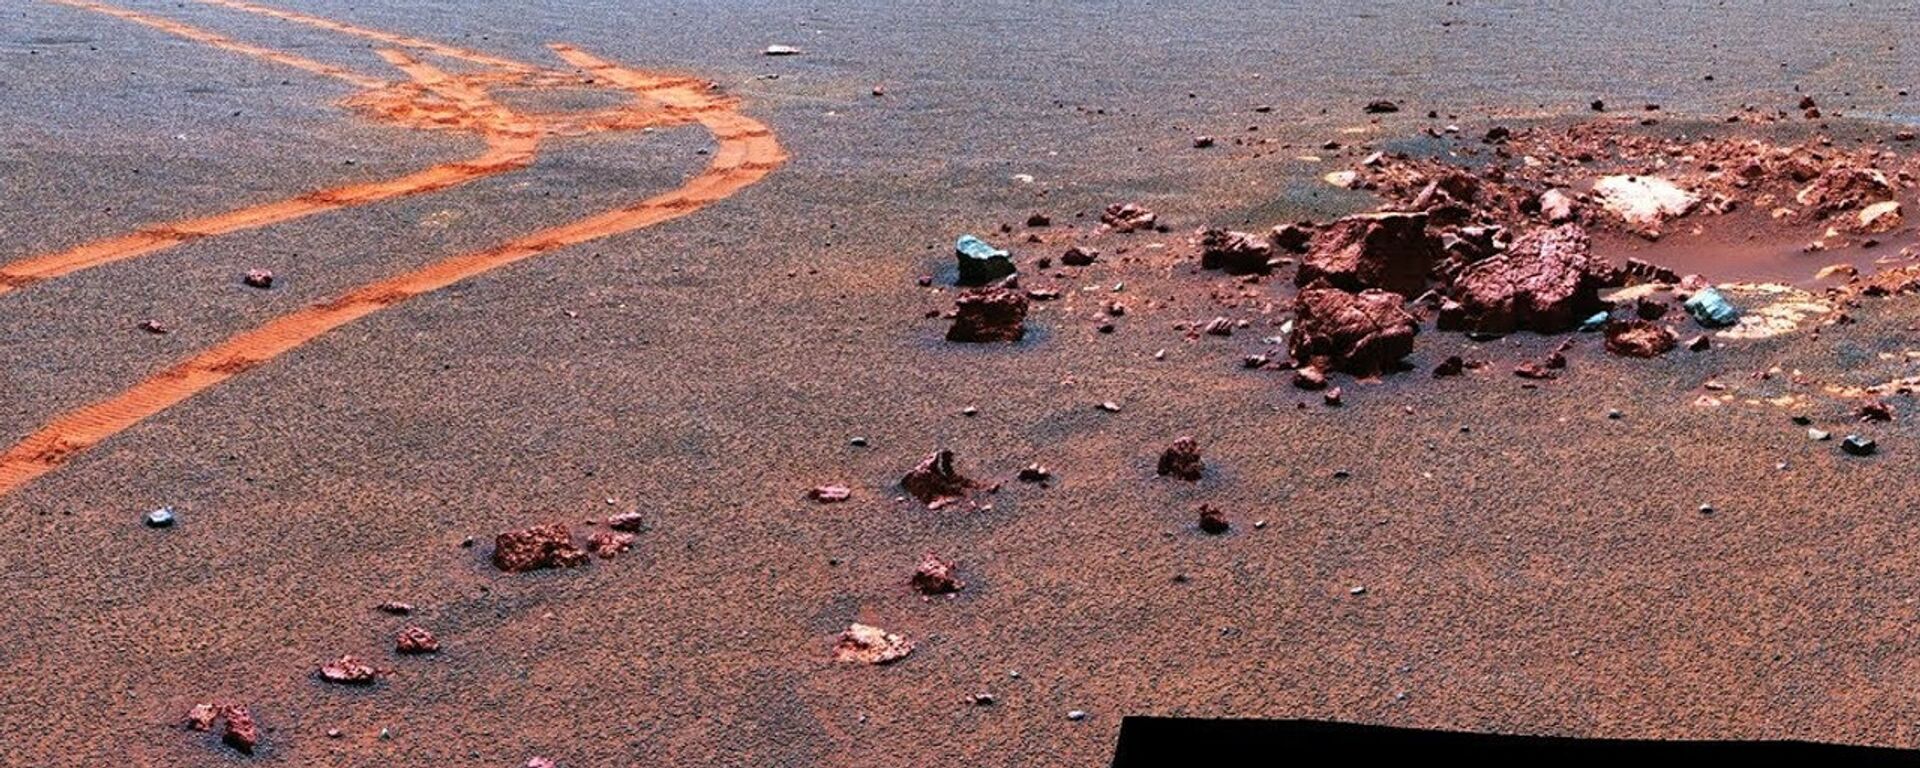 image from NASA Mars rover Opportunity of the Martian surface (NASA) - Sputnik International, 1920, 23.02.2019